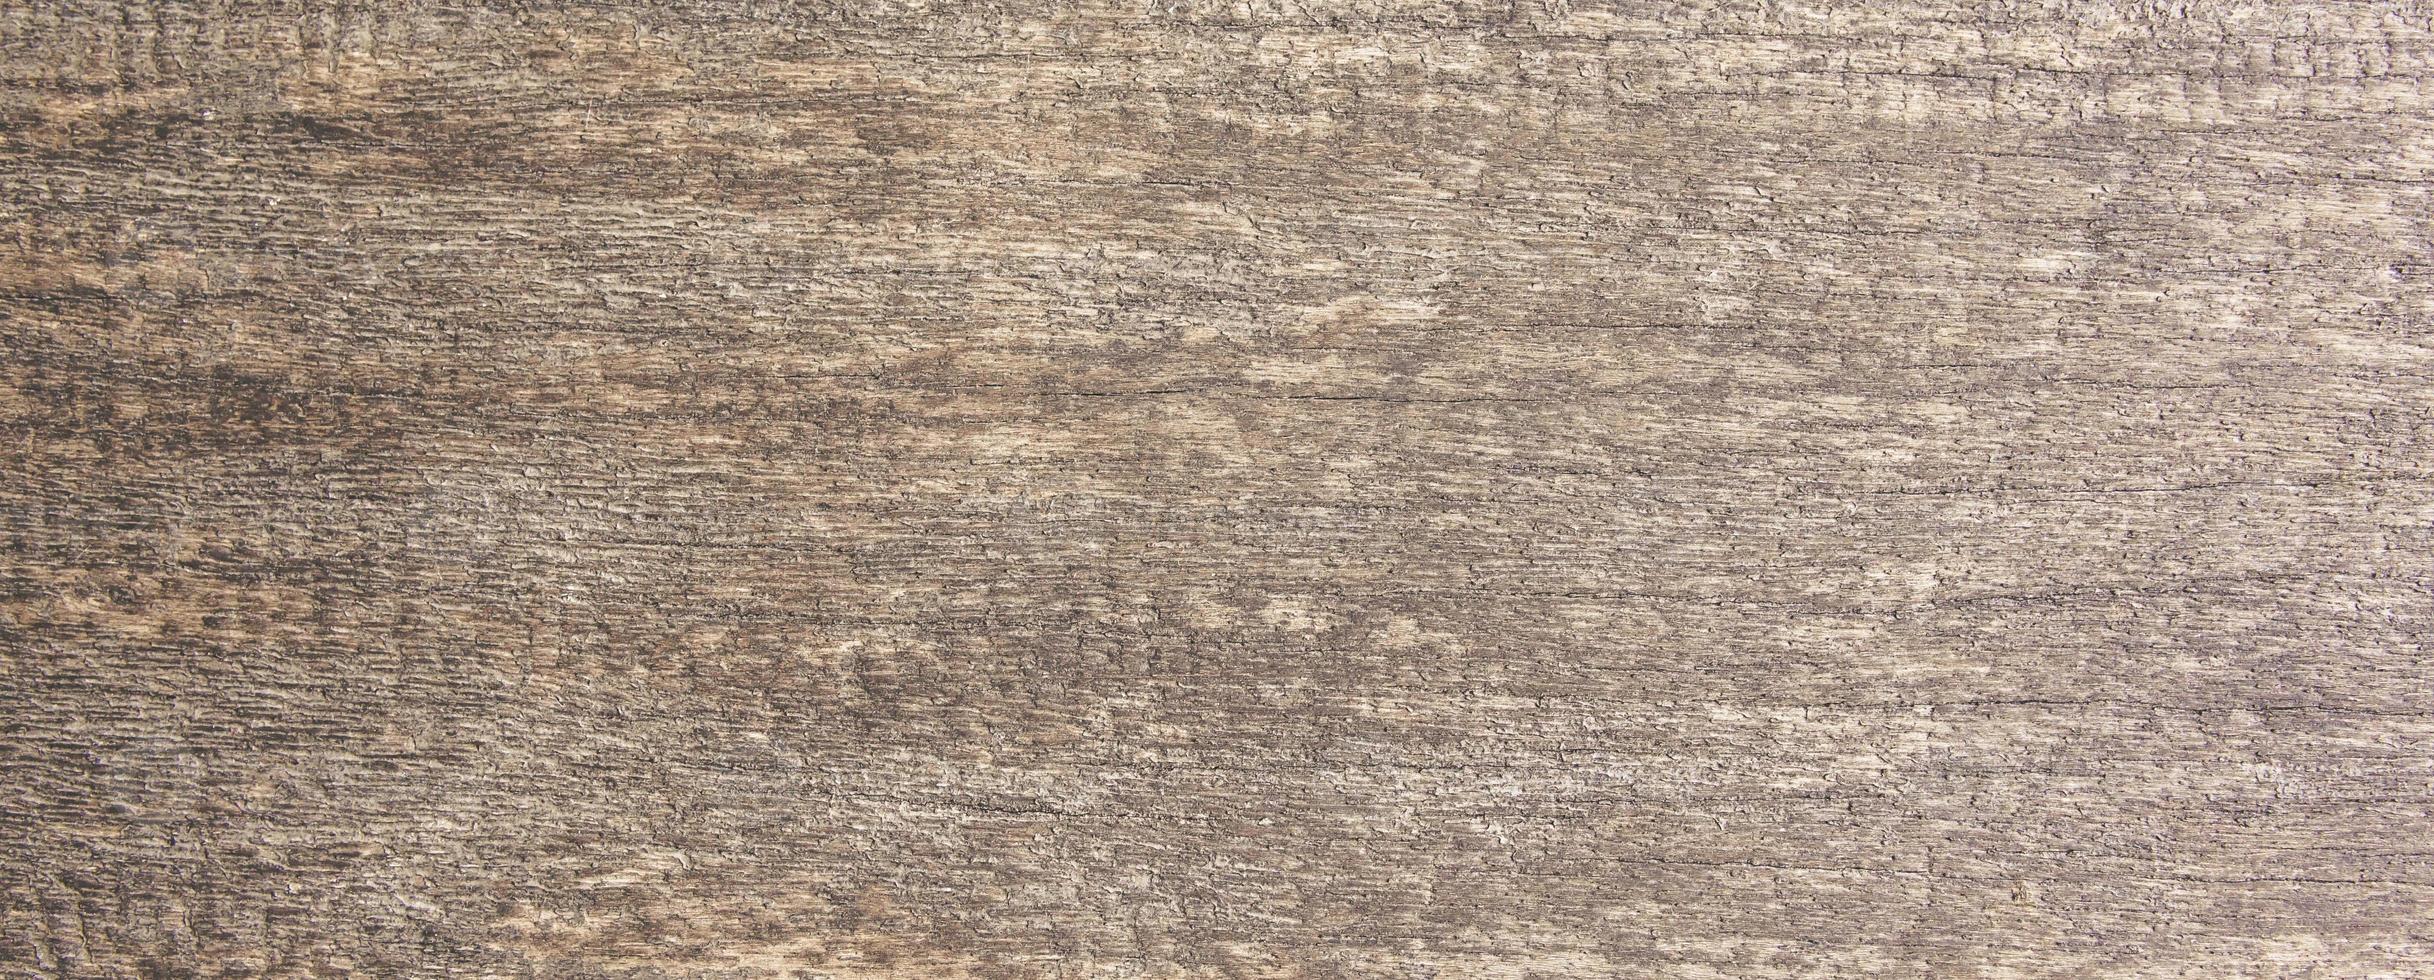 Fondo de textura de madera, textura de patrón de madera. foto